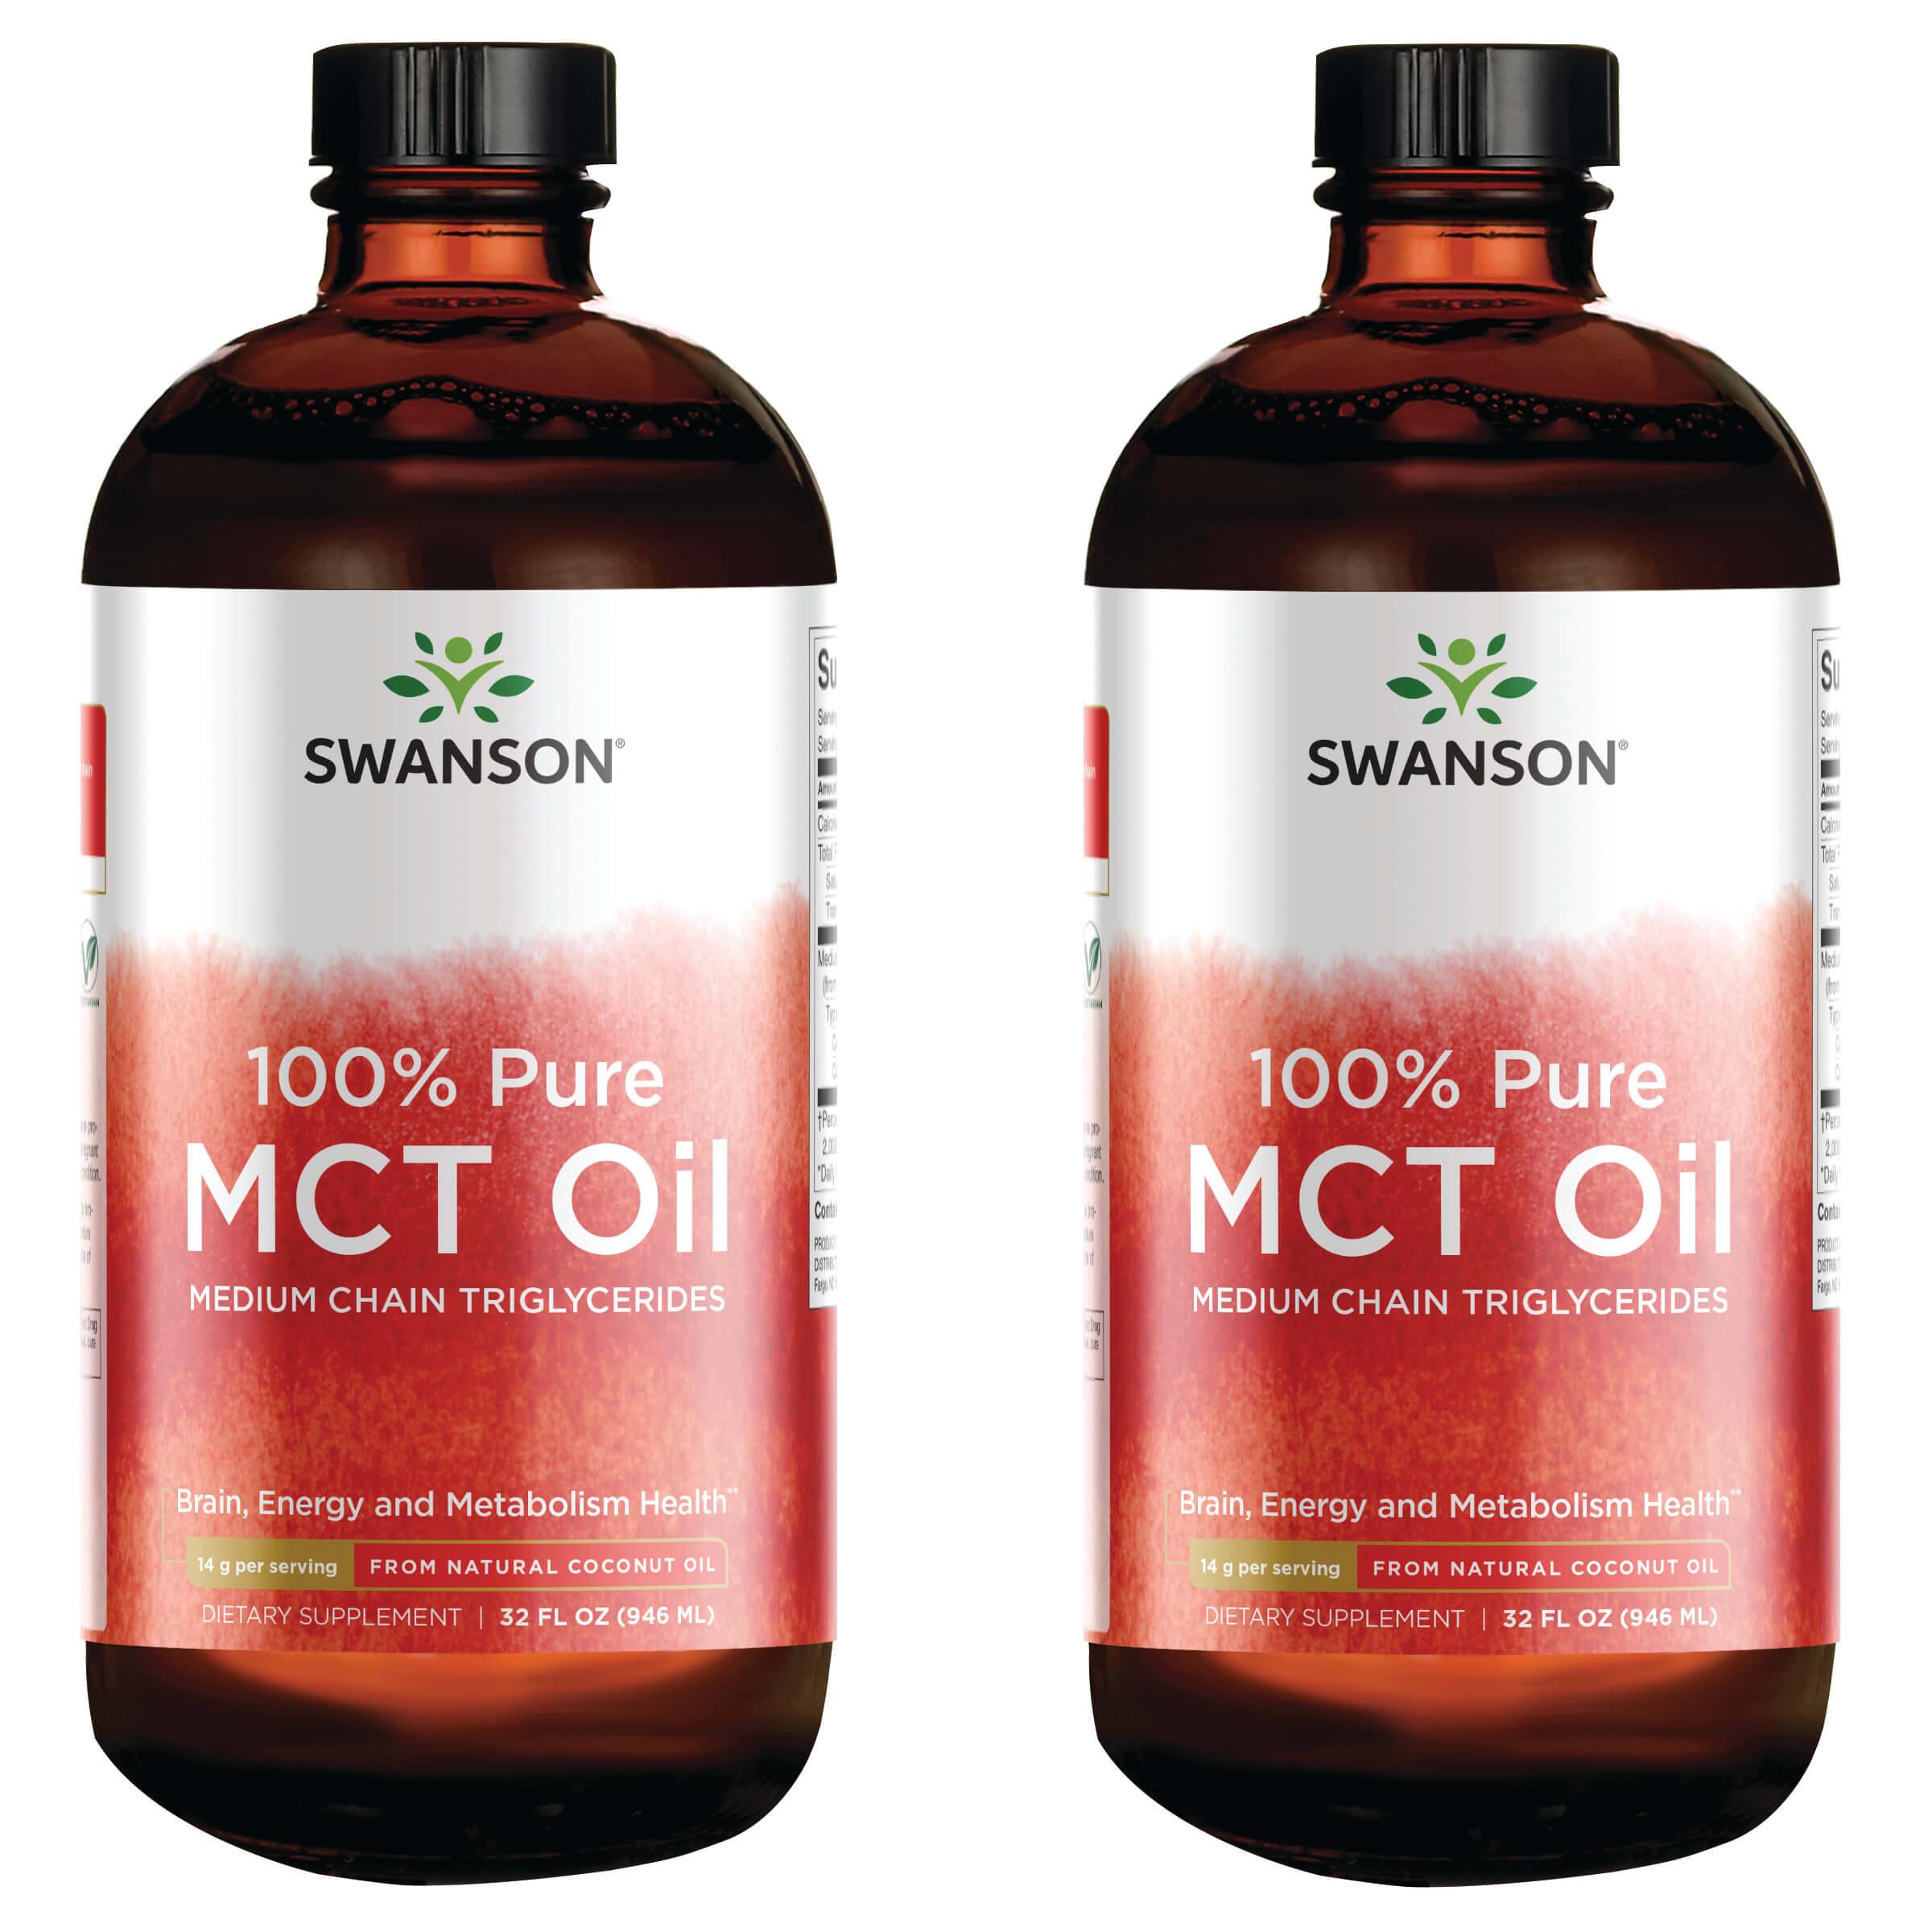 Swanson Premium 100% Pure Mct Oil Medium Chain Triglycerides 2 Pack Supplement Vitamin 14 G 32 fl oz Liquid